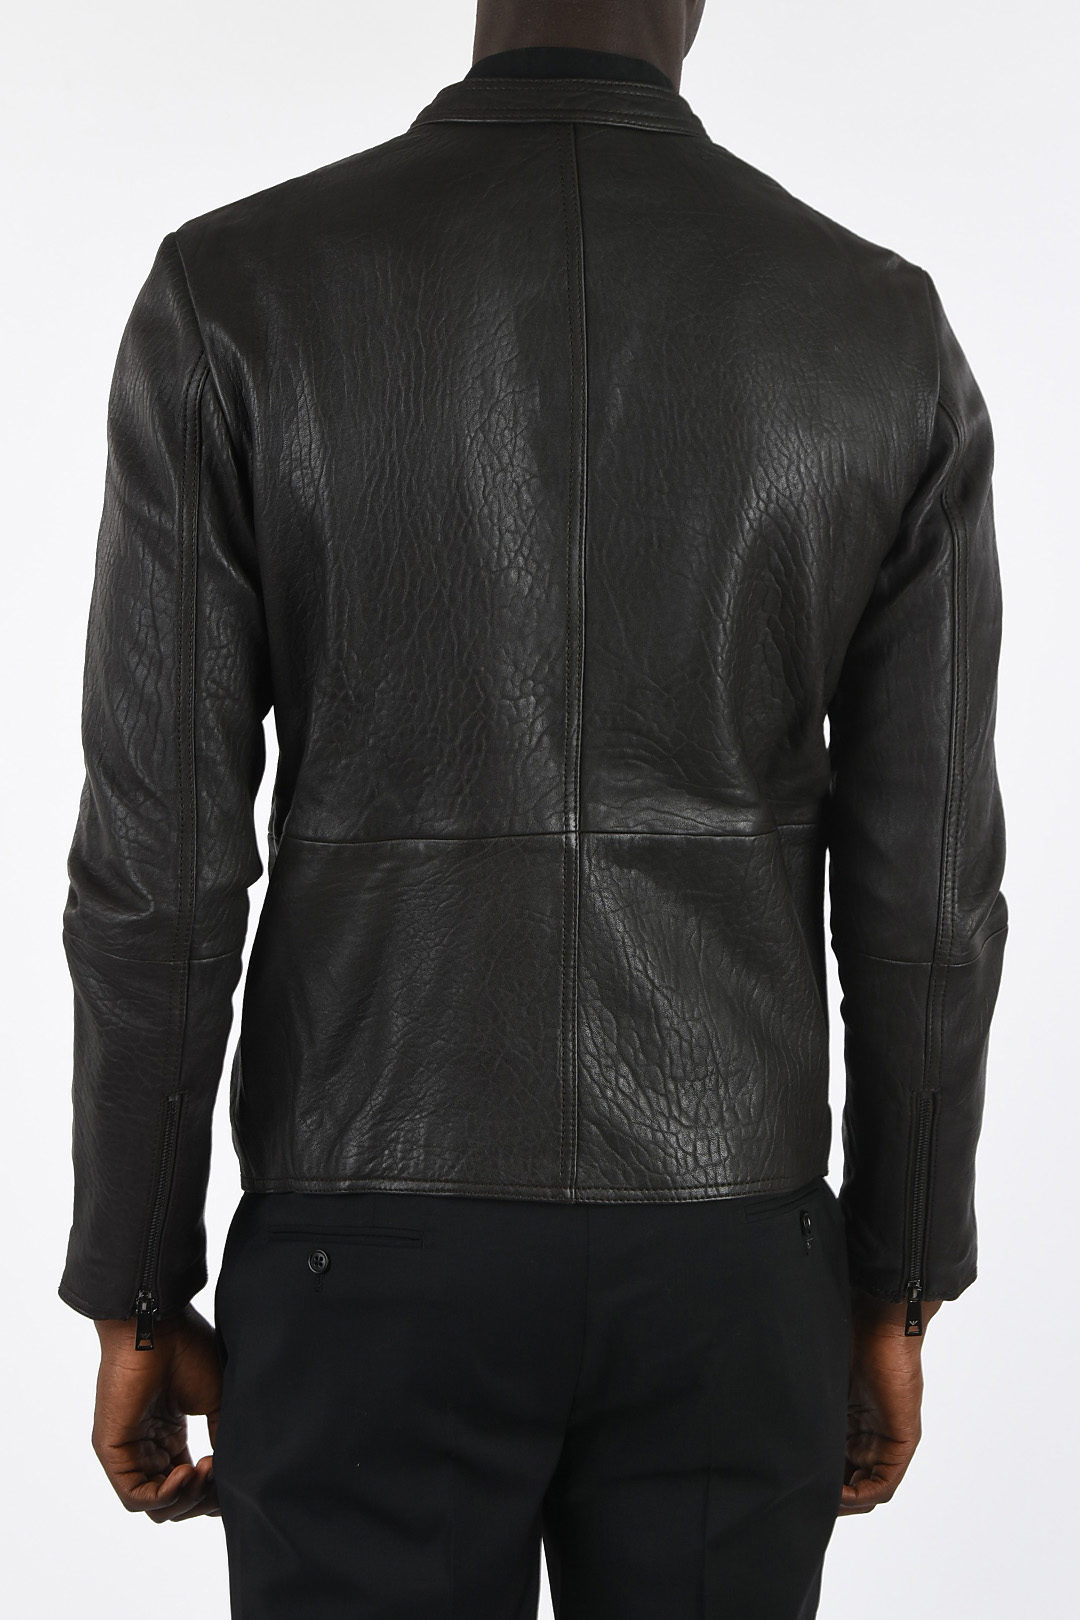 Armani ARMANI JEANS Leather Biker Jacket men - Glamood Outlet